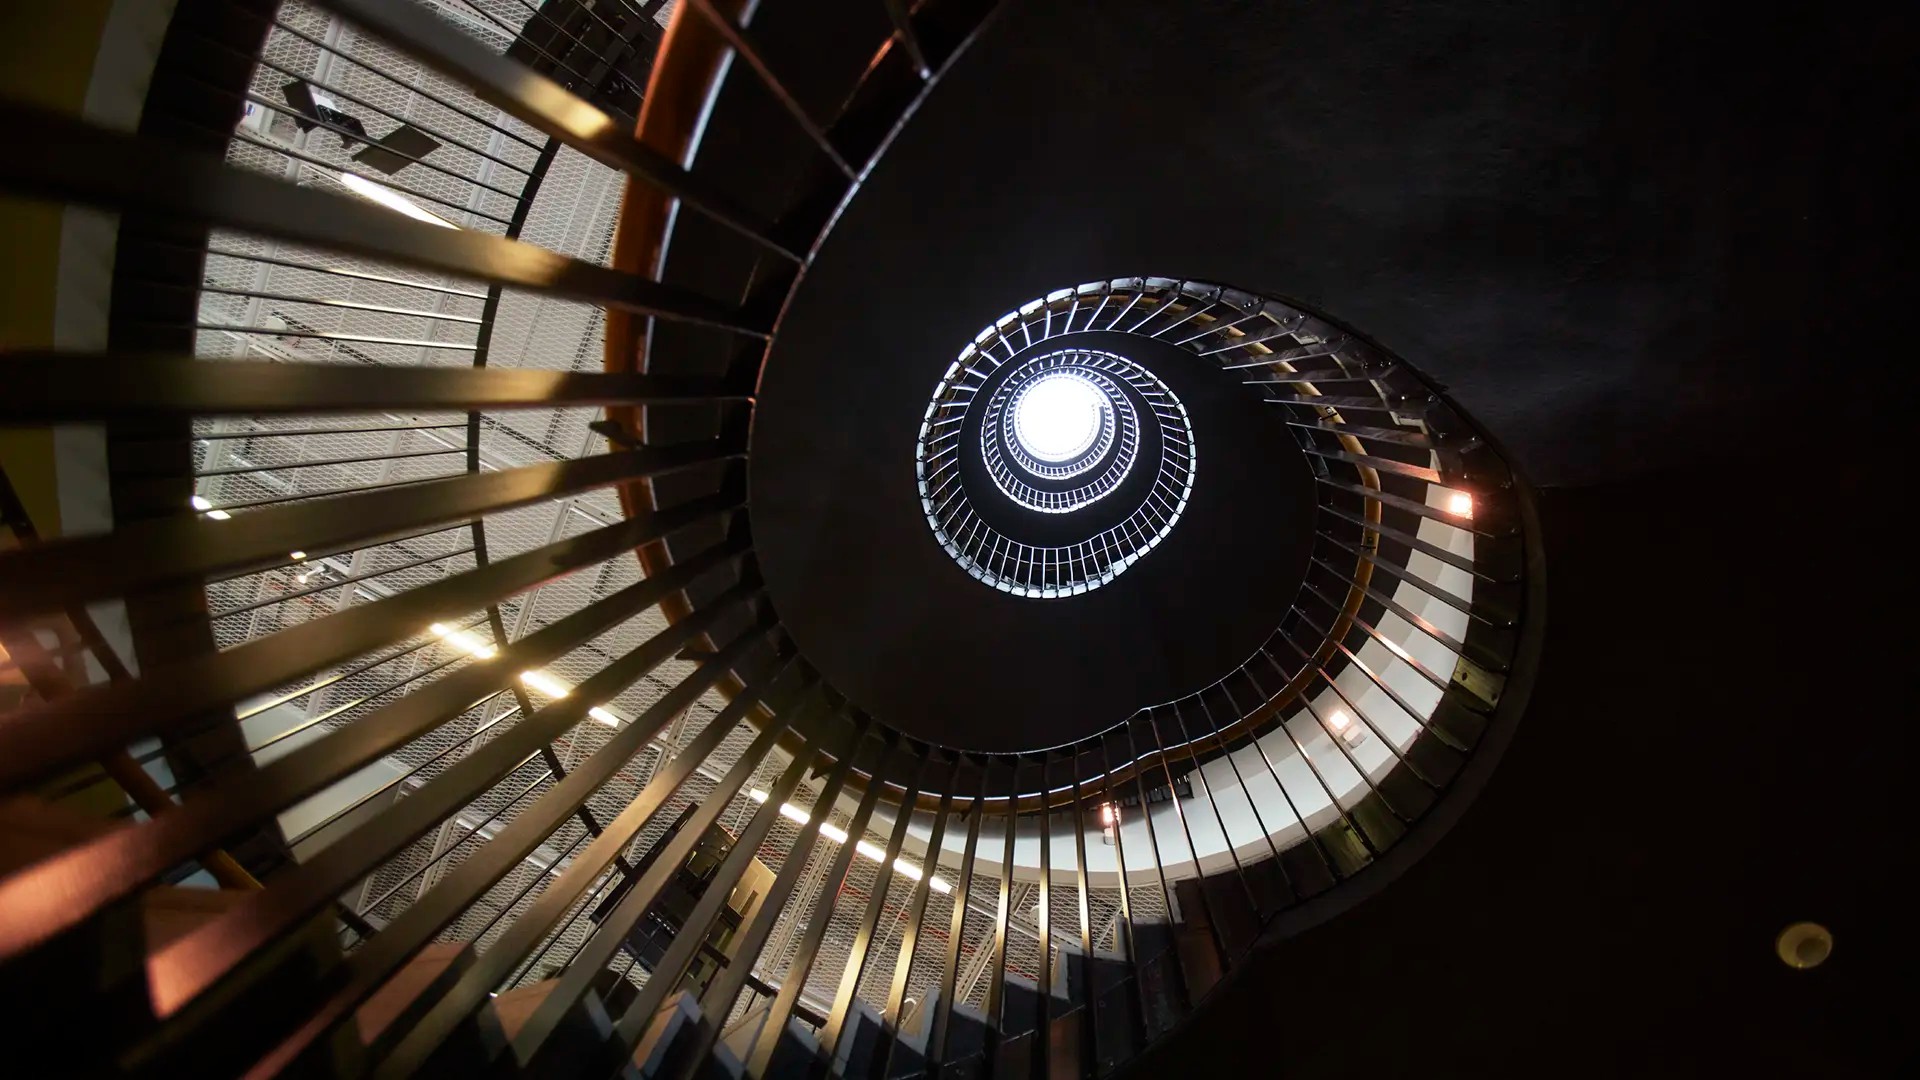 Spiral stair from below